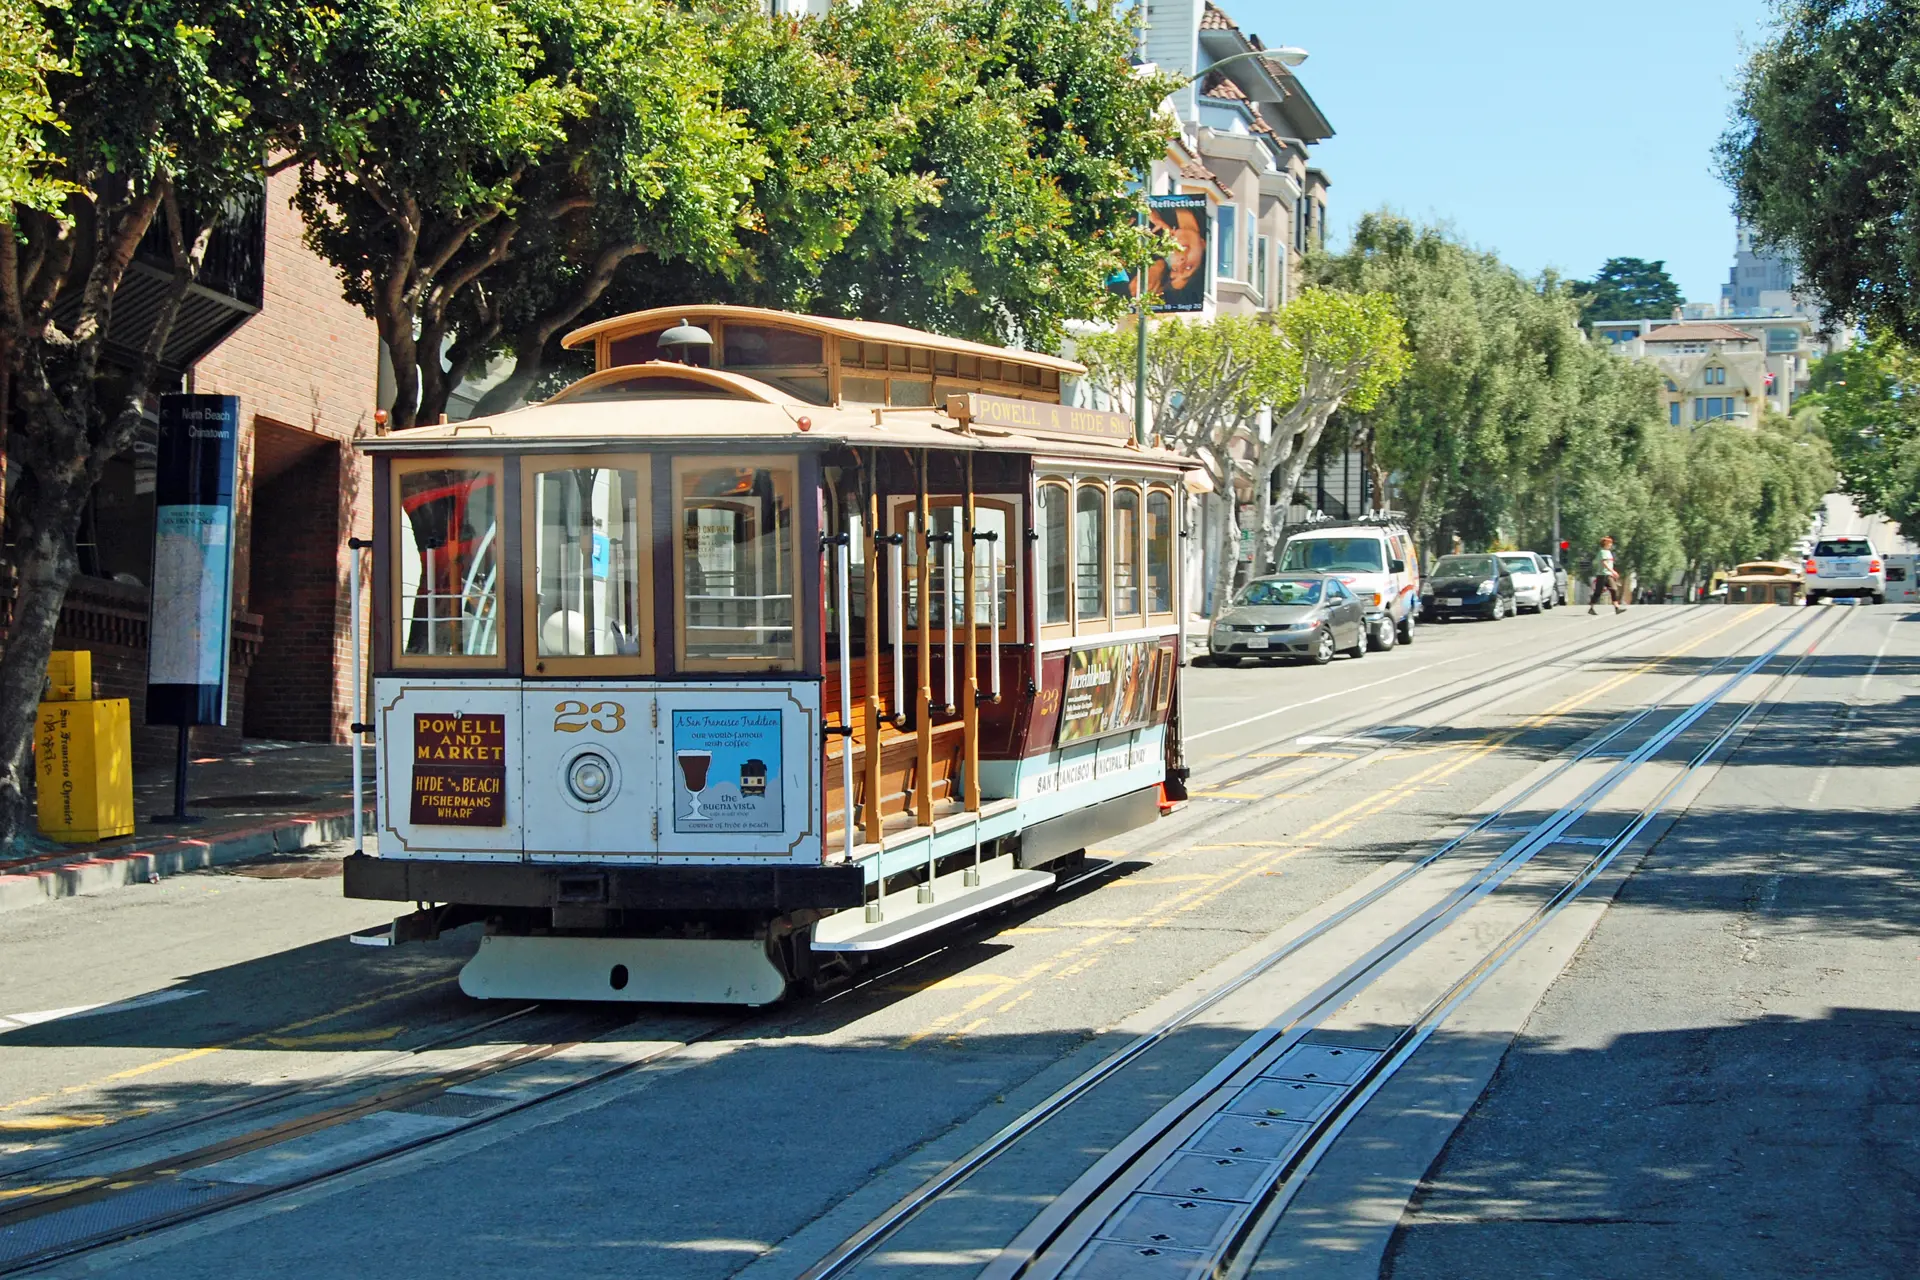 Cable car tram circa June 2009 in San Francisco, USA shutterstock_72392503.jpg